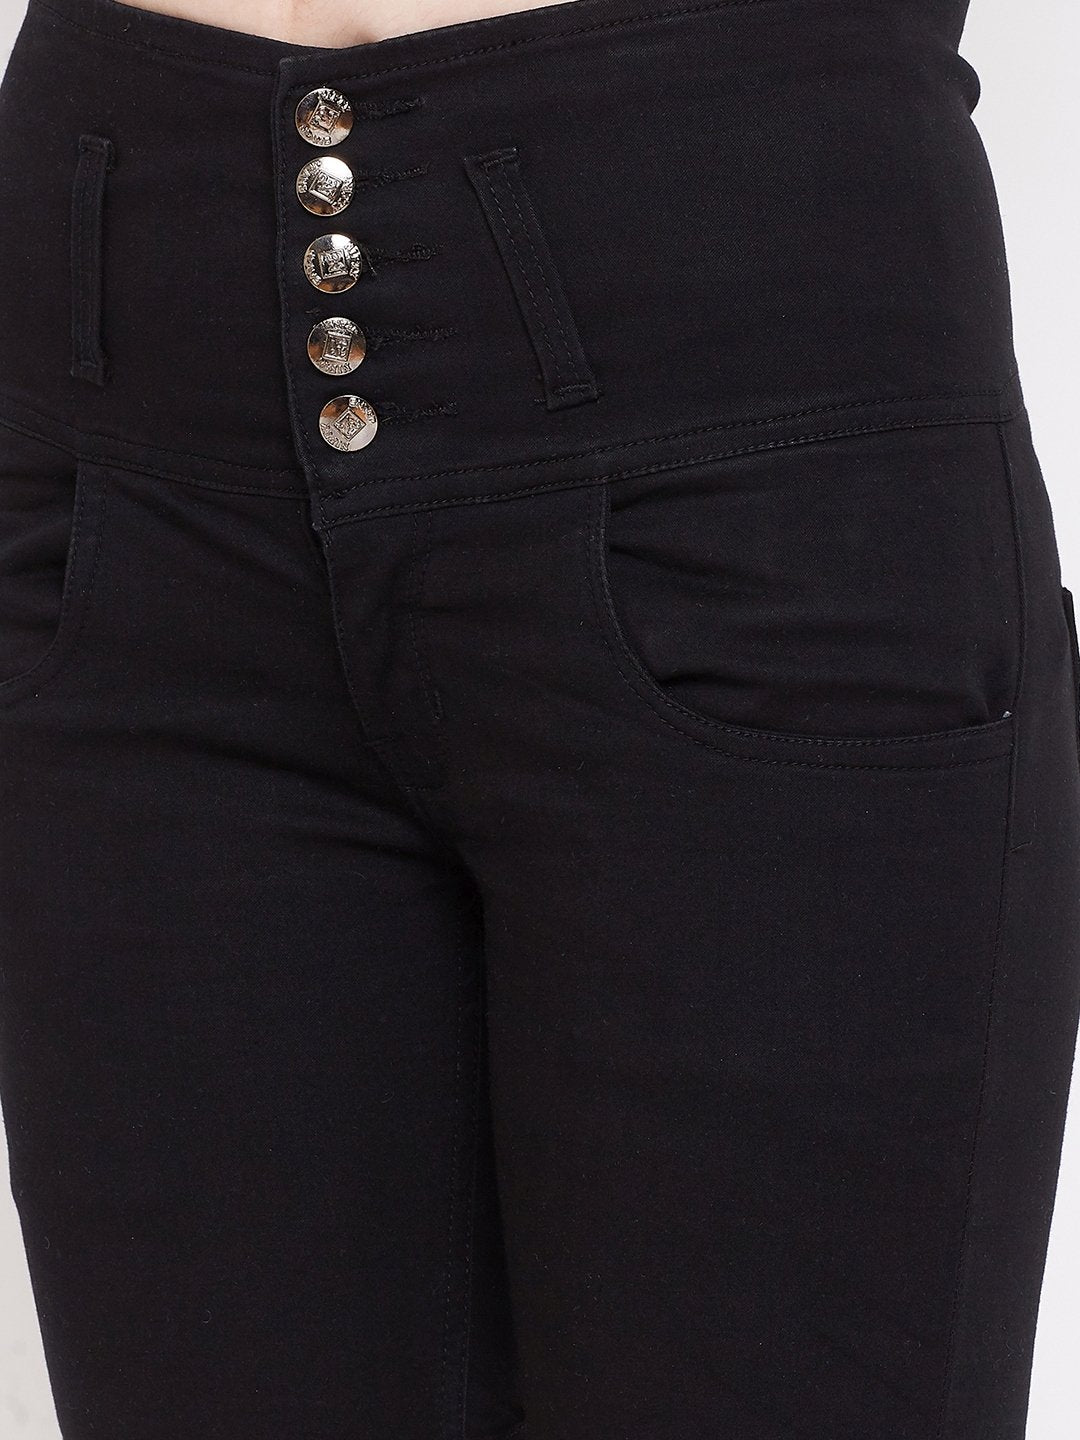 High Waist 5 Button Black Shorts - NiftyJeans